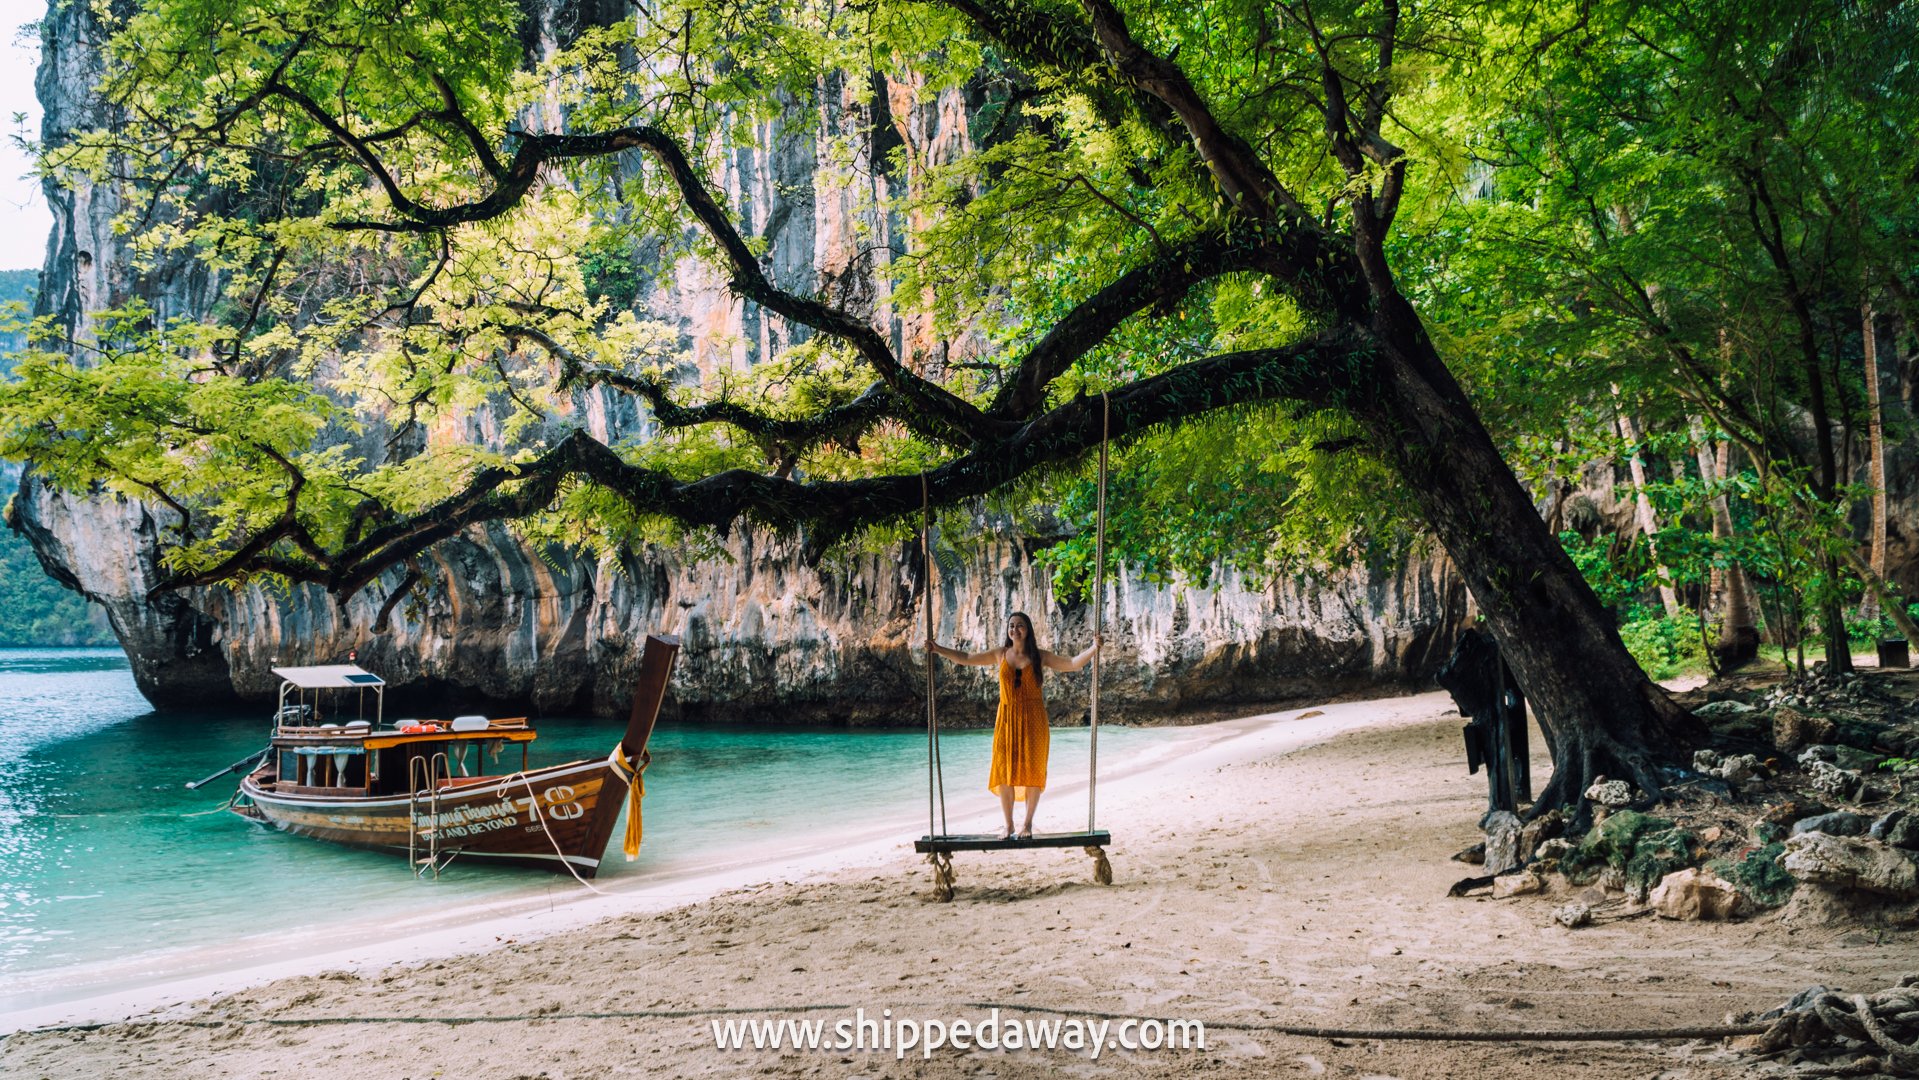 Swinging on the swing at Lao Lading Island, Phang Nga Bay